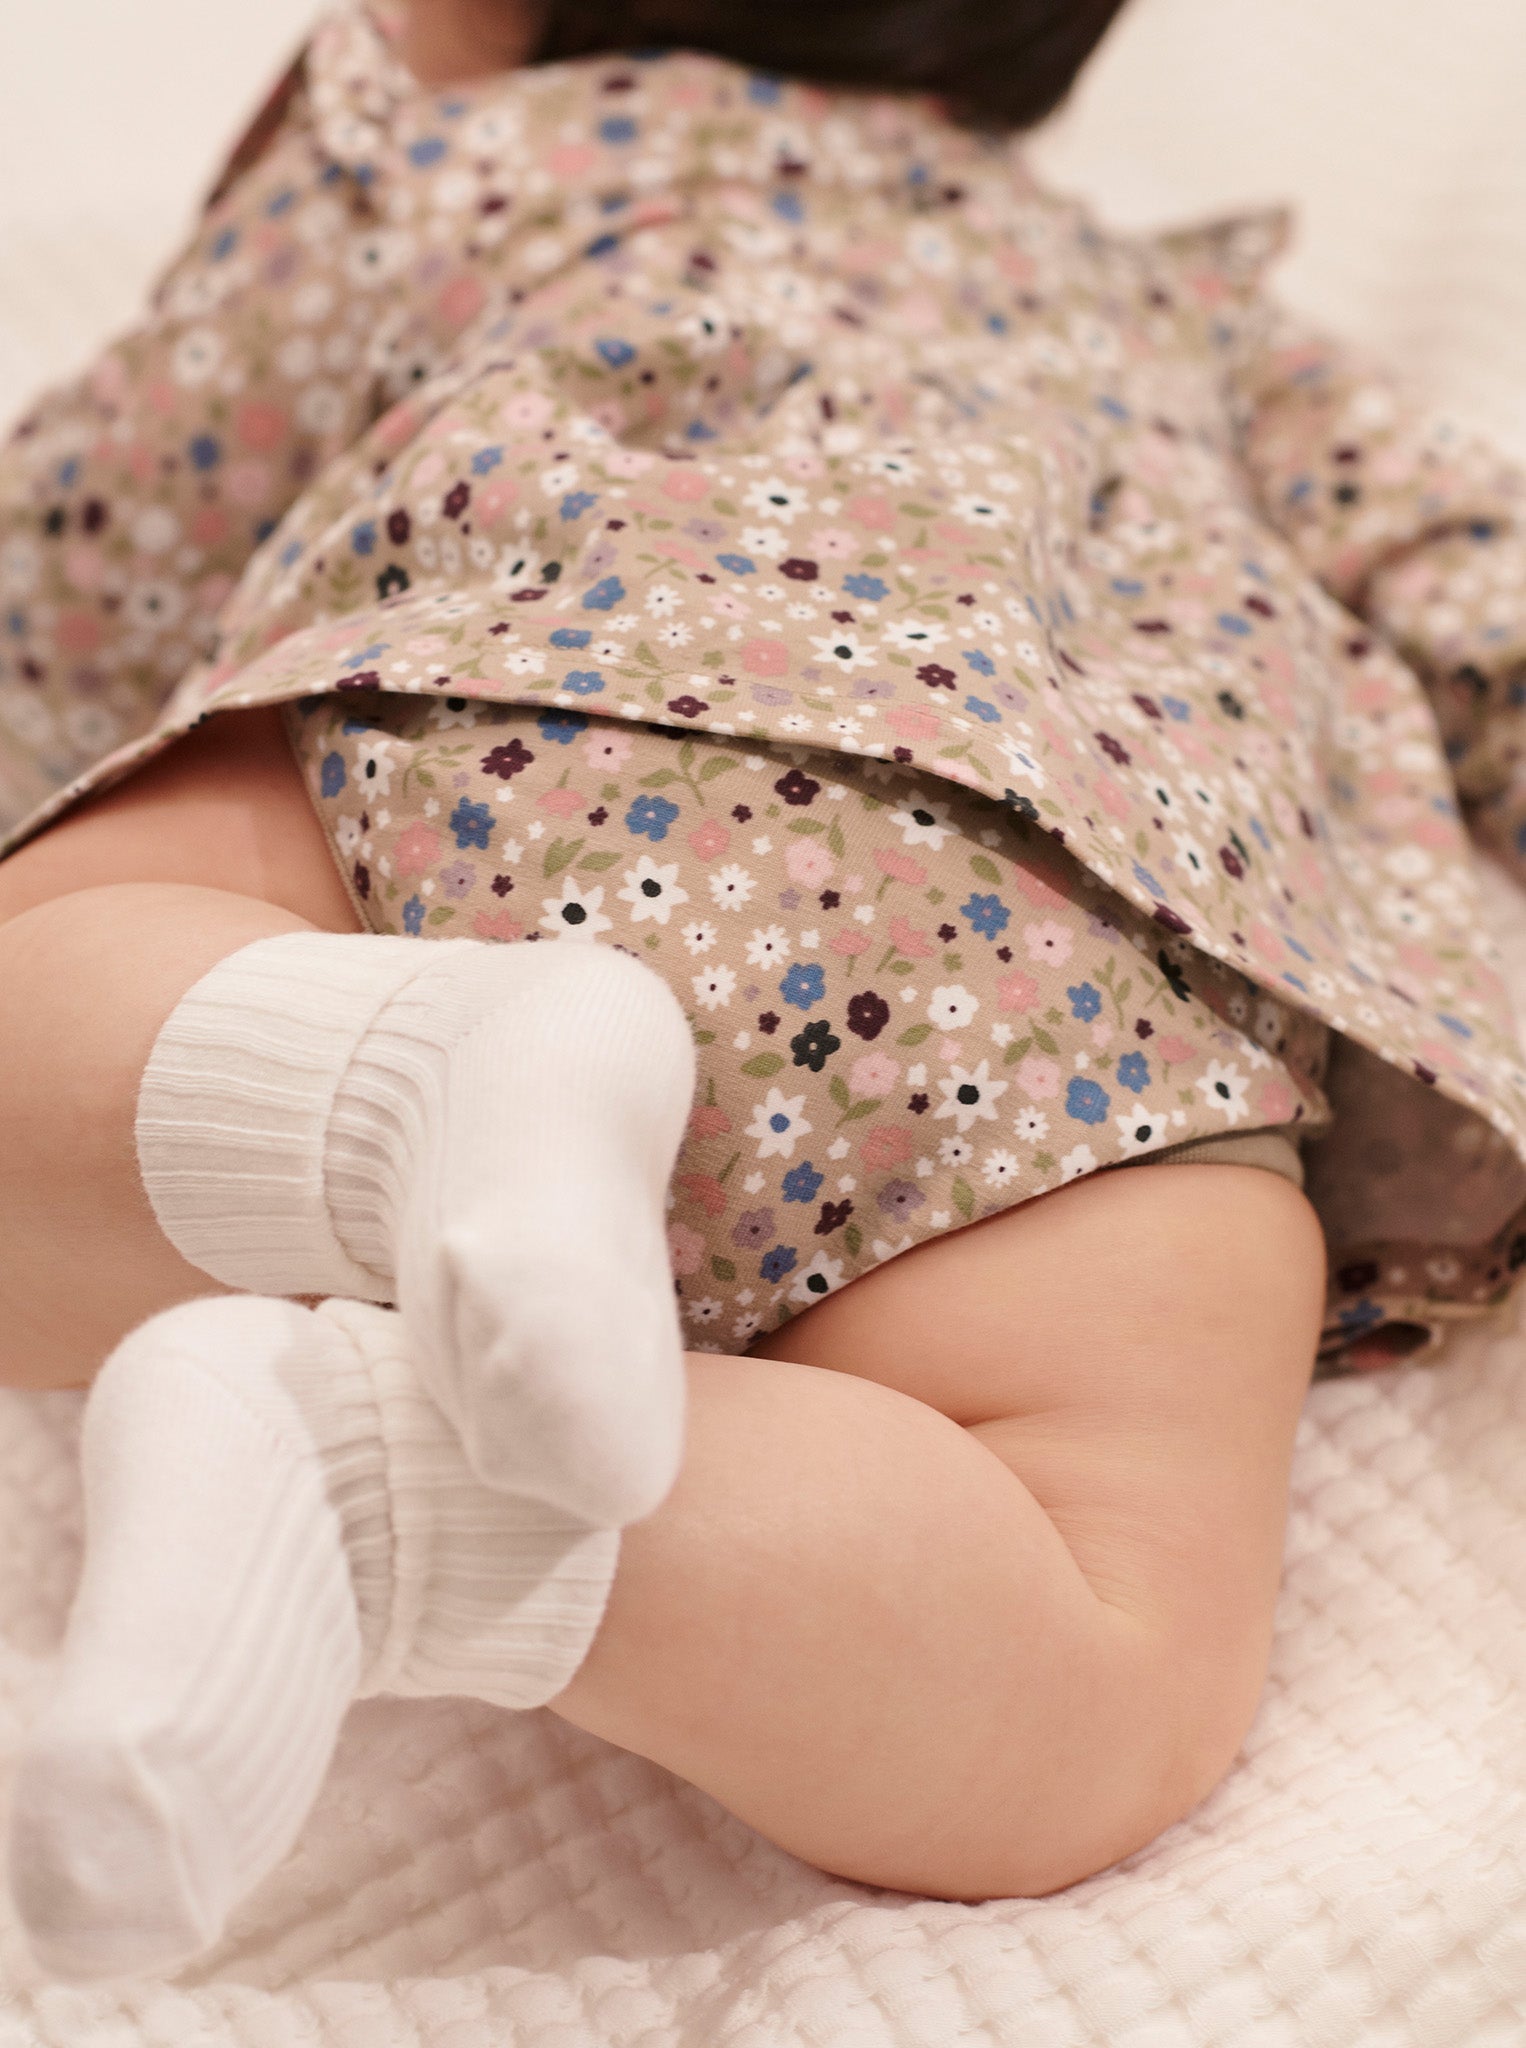 Floral Baby Babygrow Dress